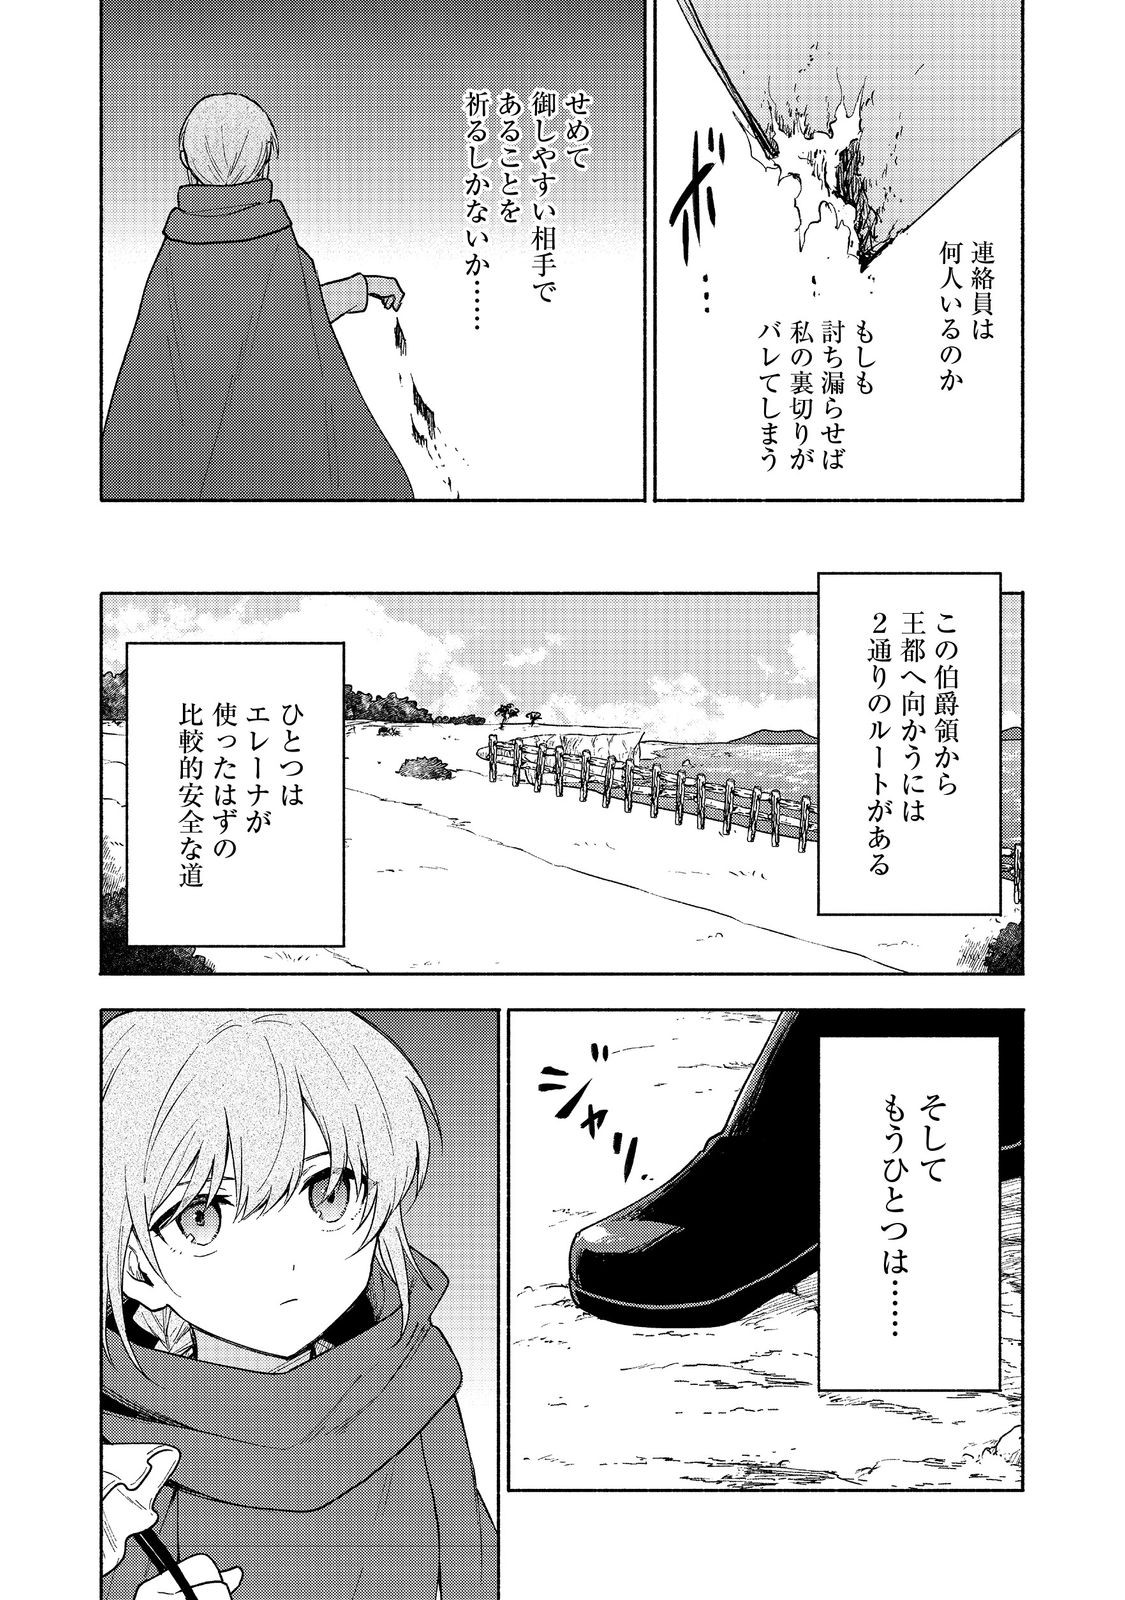 Otome Game no Heroine de Saikyou Survival - Chapter 21 - Page 2